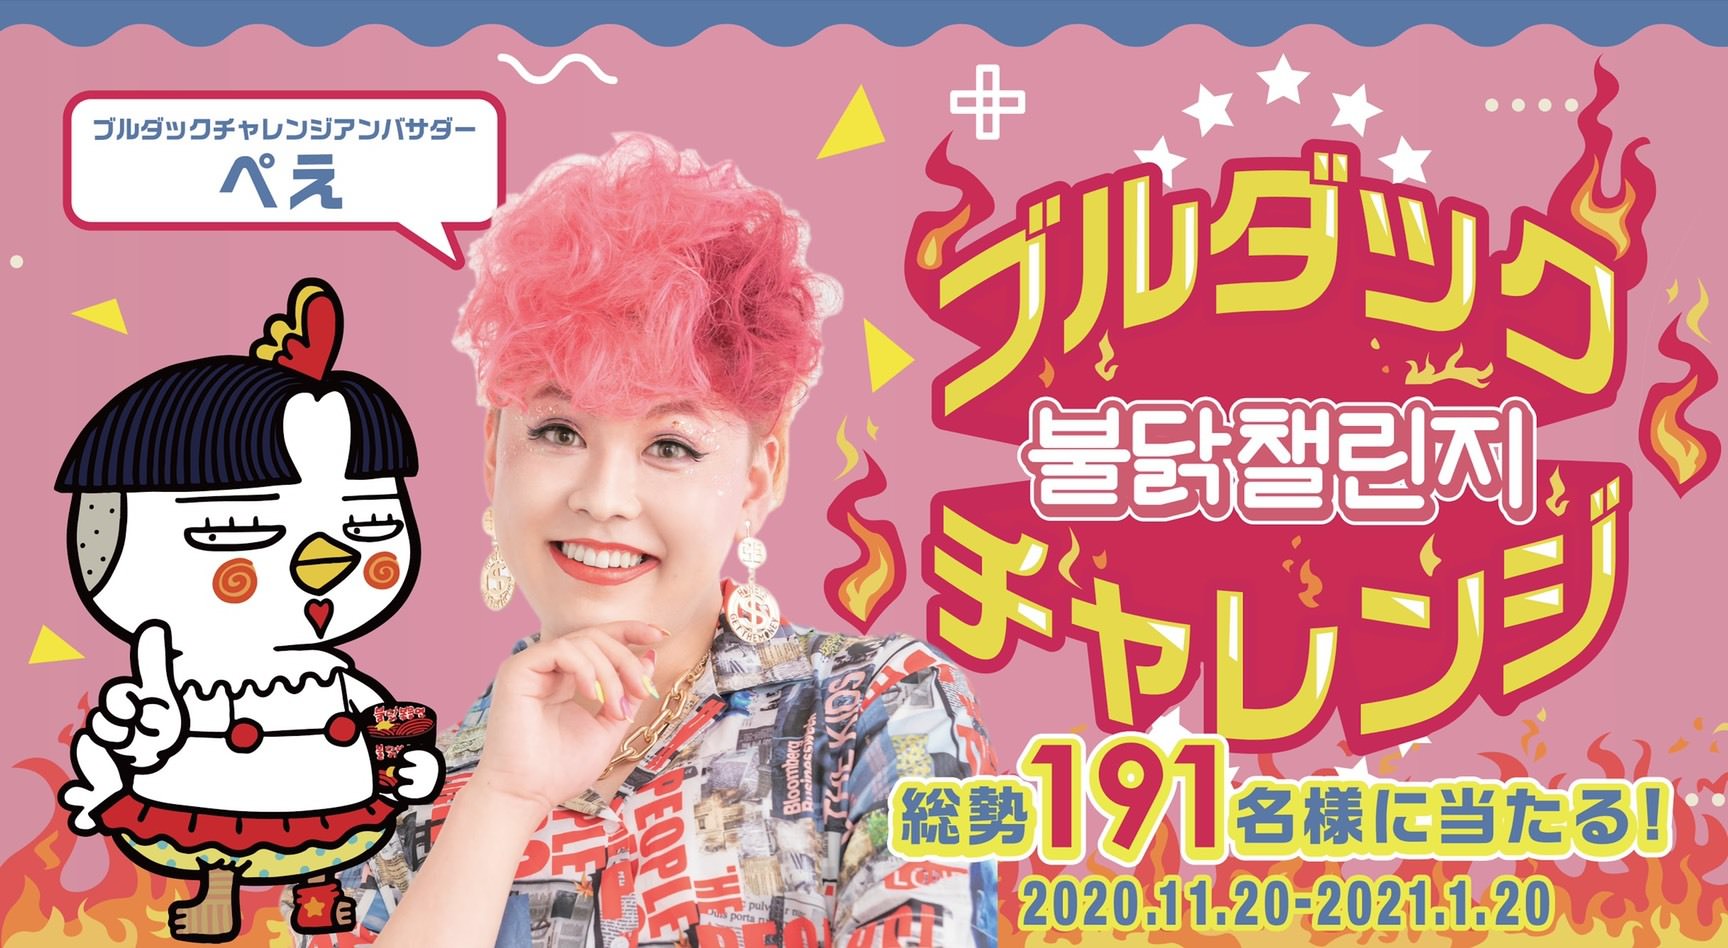 Shopify Japan 初となるブラックフライデー・サイバーマンデー企画「Shopify Japan BFCM 2020」に参加決定！